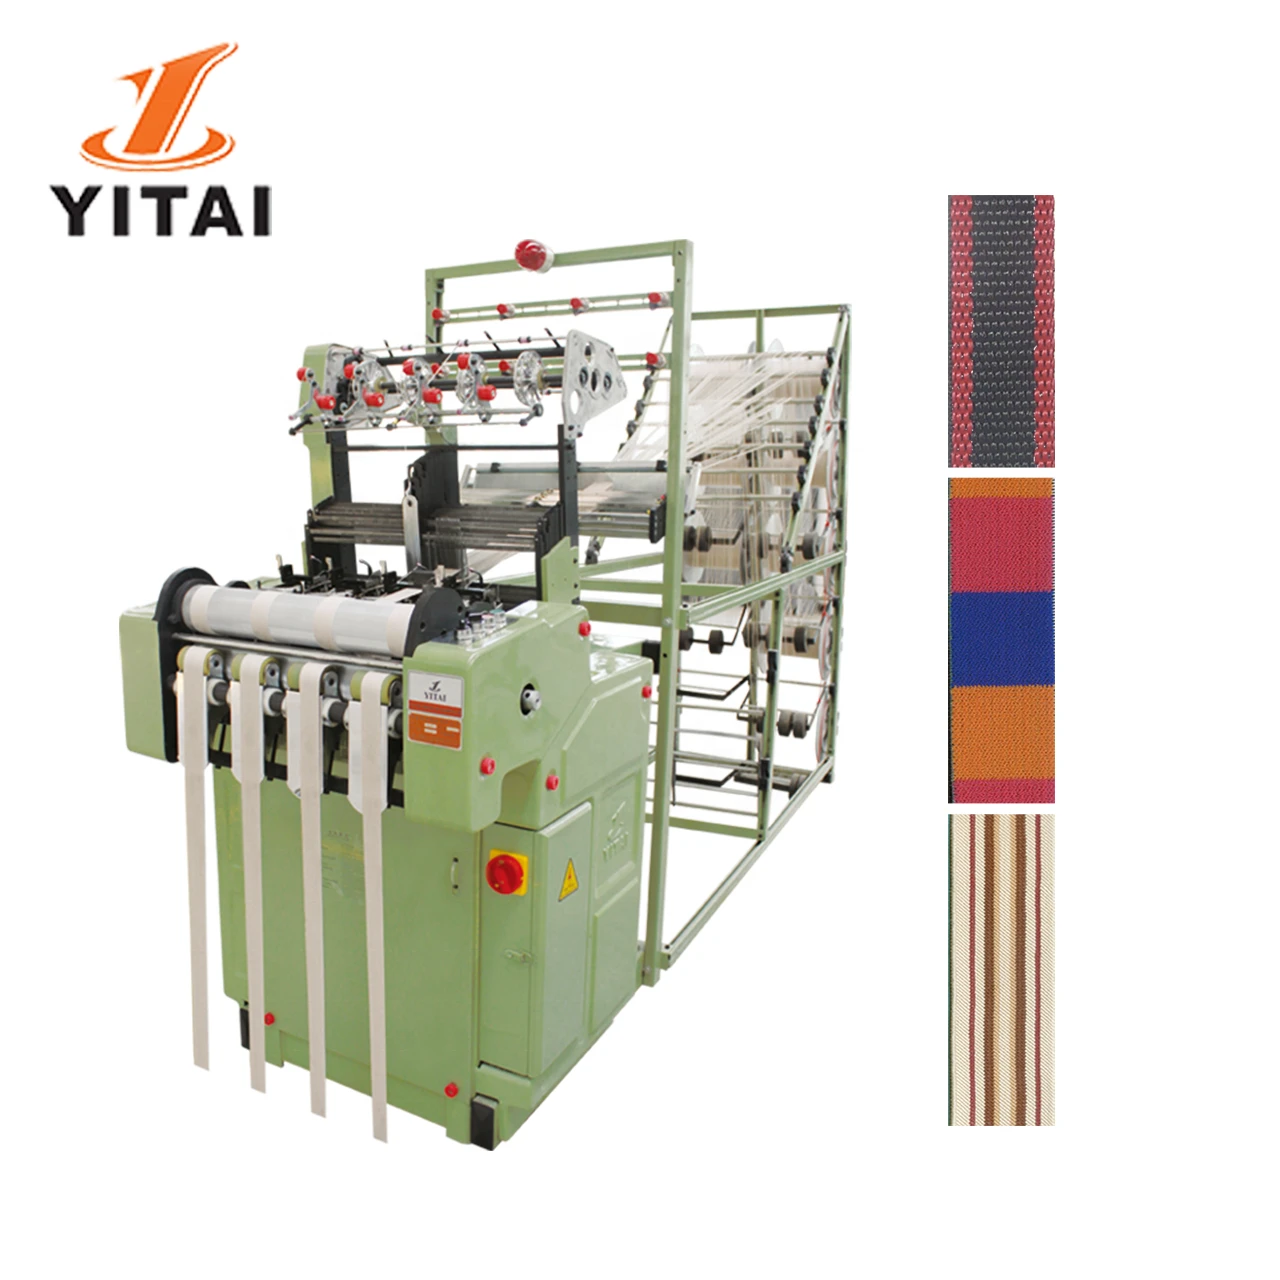 Yitai New Textile Weaving Weave Shutle Small Traditional Narrow Fabric Cotton Loom Machine